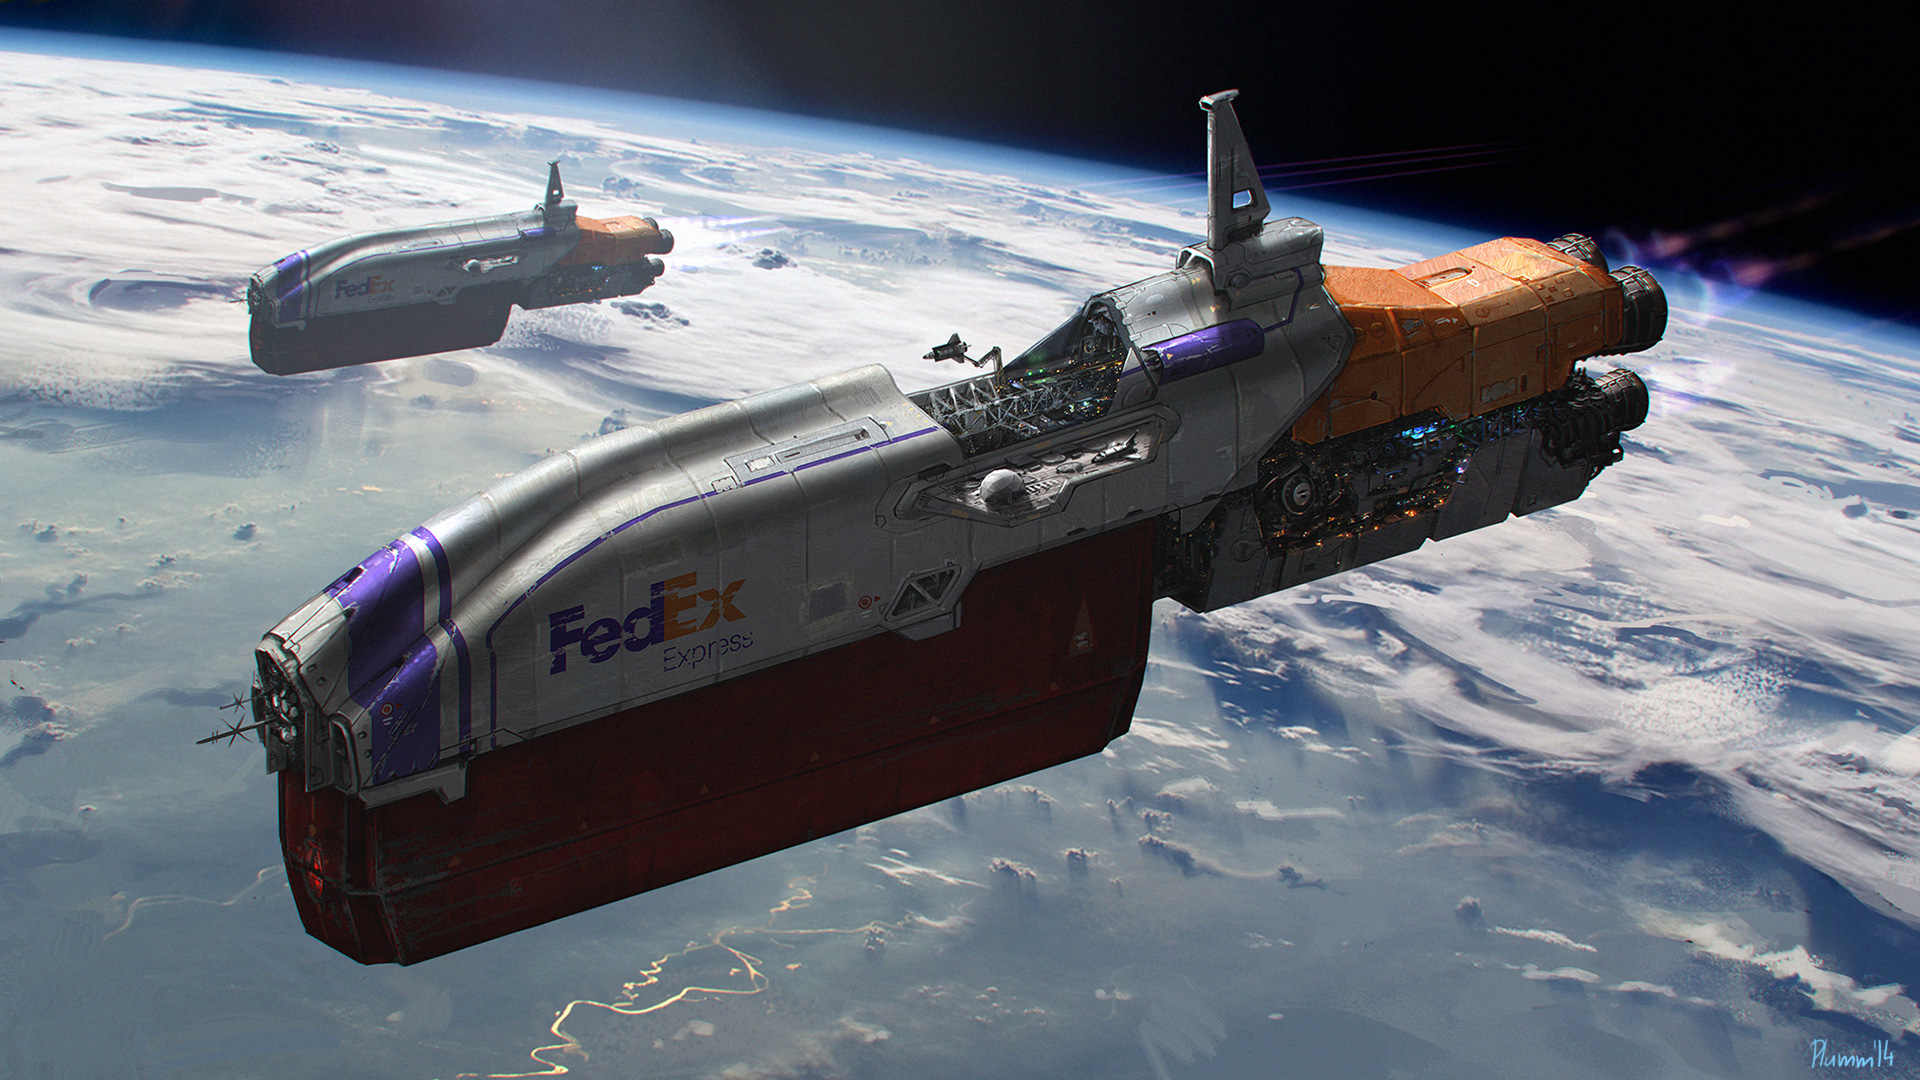 FedEx Spaceships by Milan Martinec